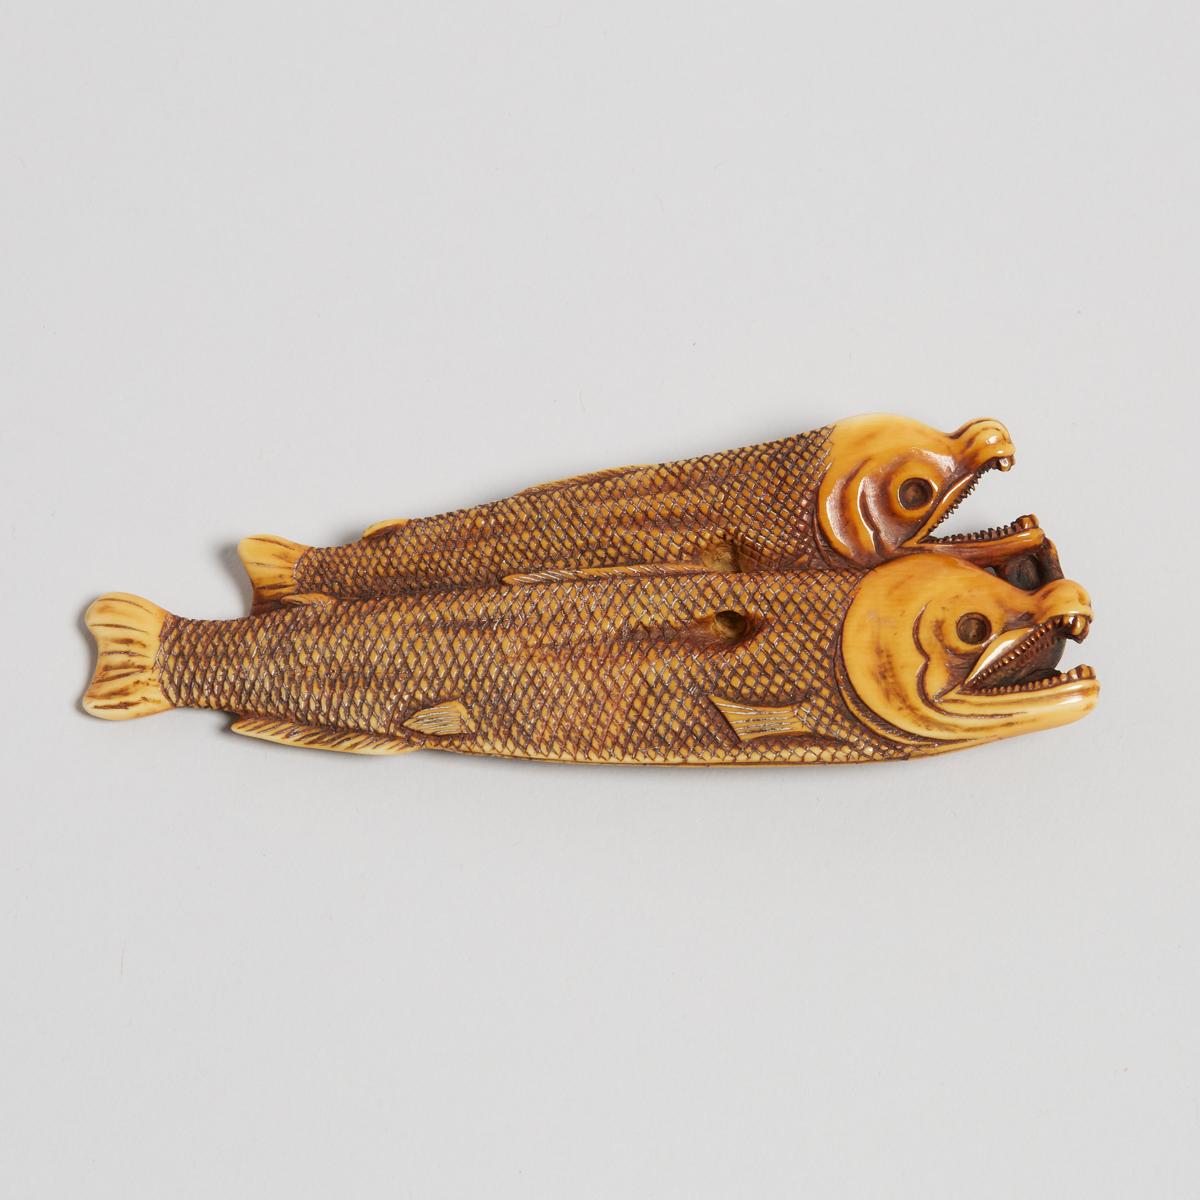 An Ivory Netsuke of a Rat on Two Dried Salmon, 19th Century, 十九世紀 牙雕鼠臥三文魚根付, length 4.3 in — 11 cm - Image 3 of 3